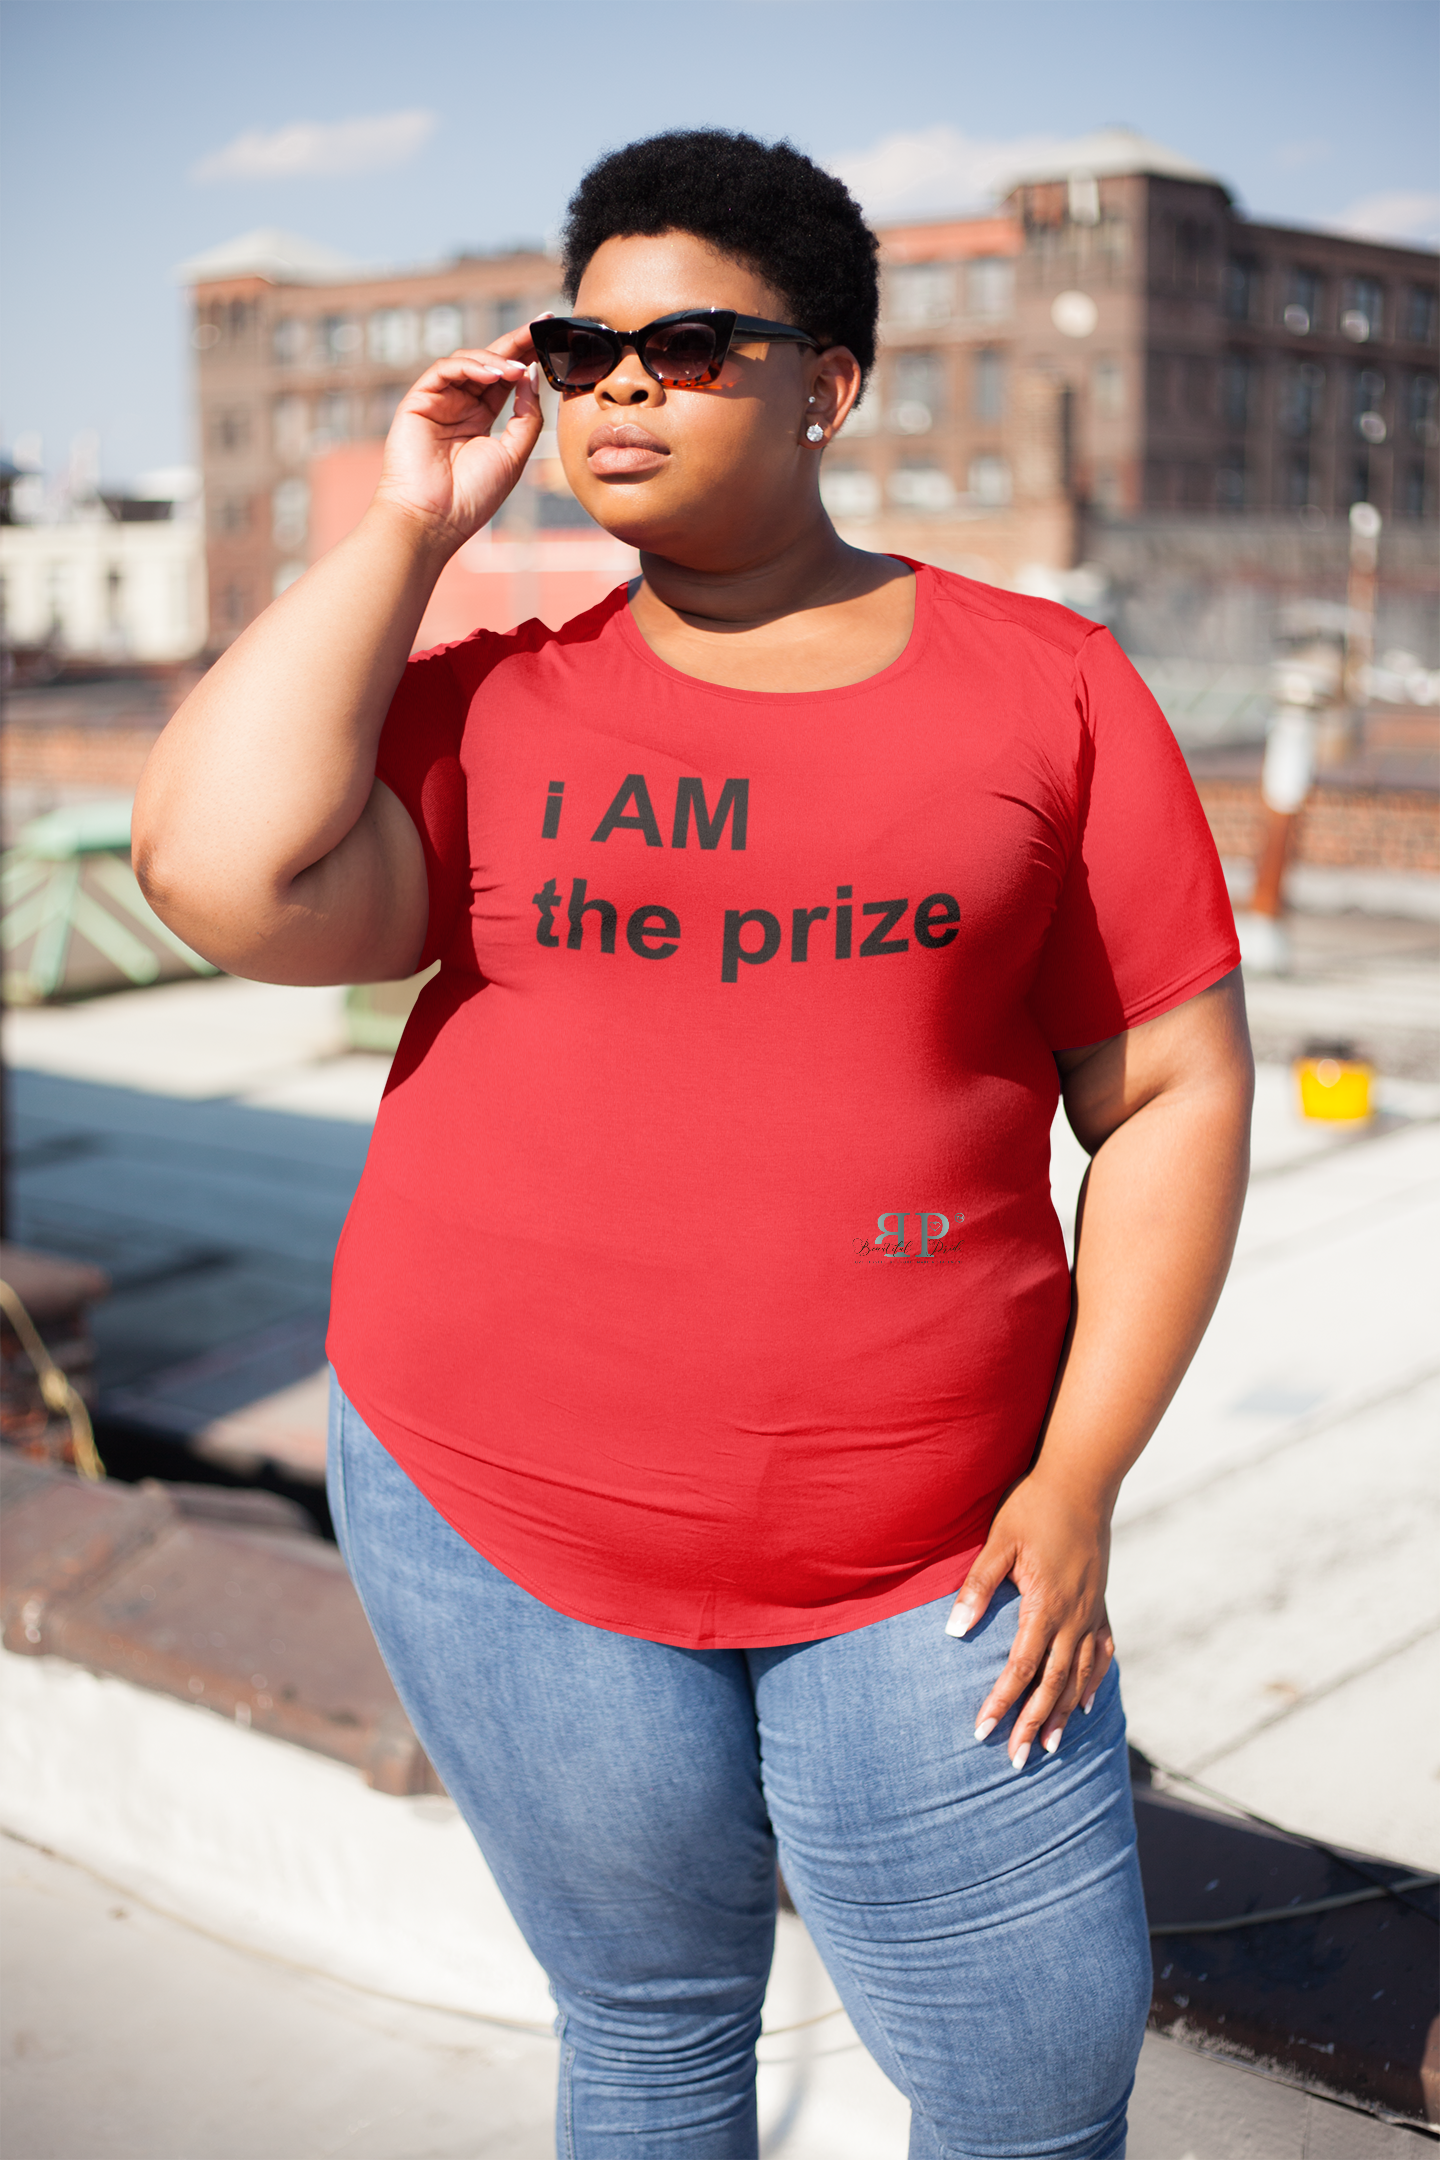 i AM the prize Unisex T-Shirt